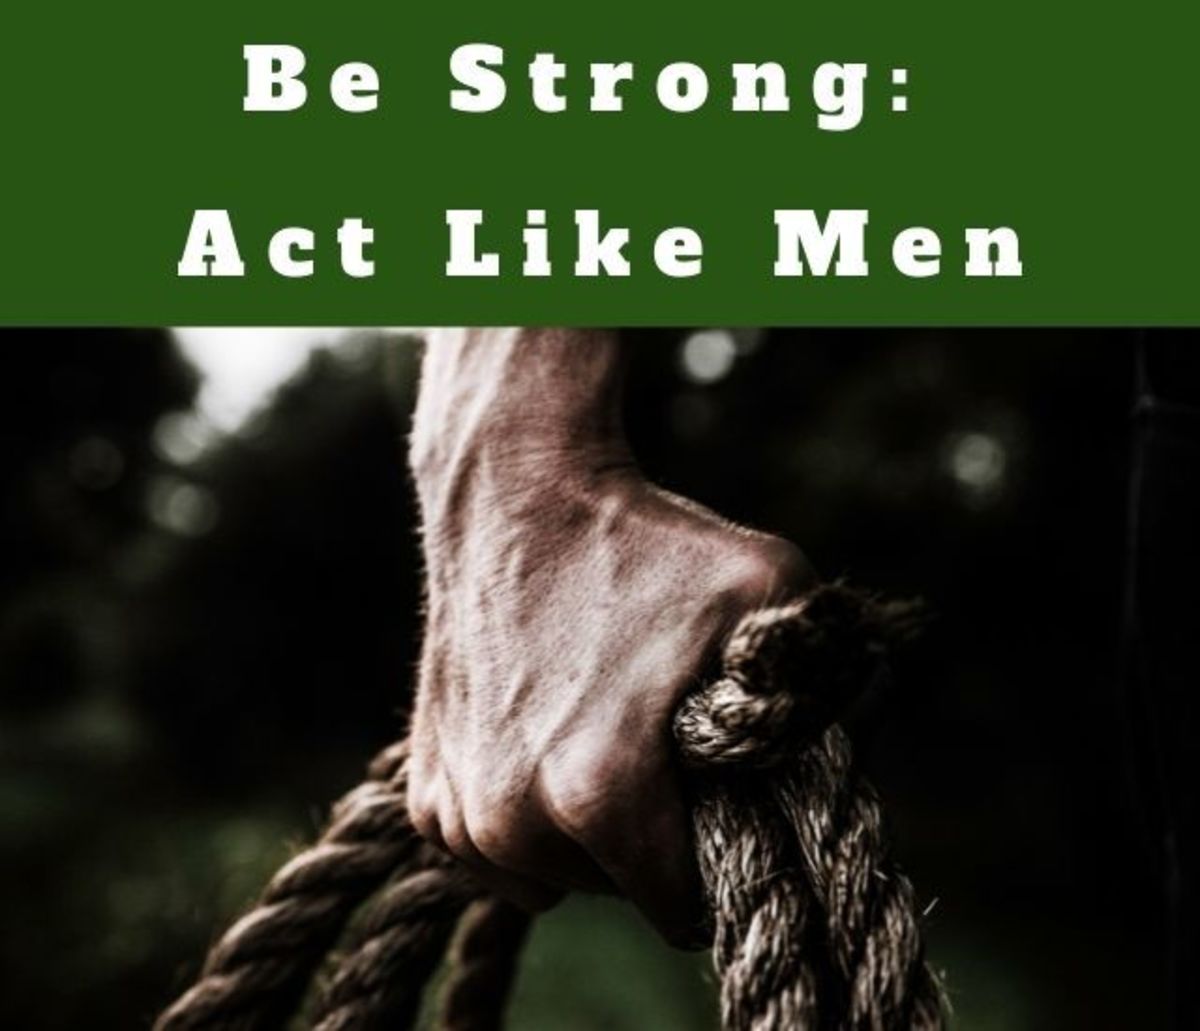 Act Like Men